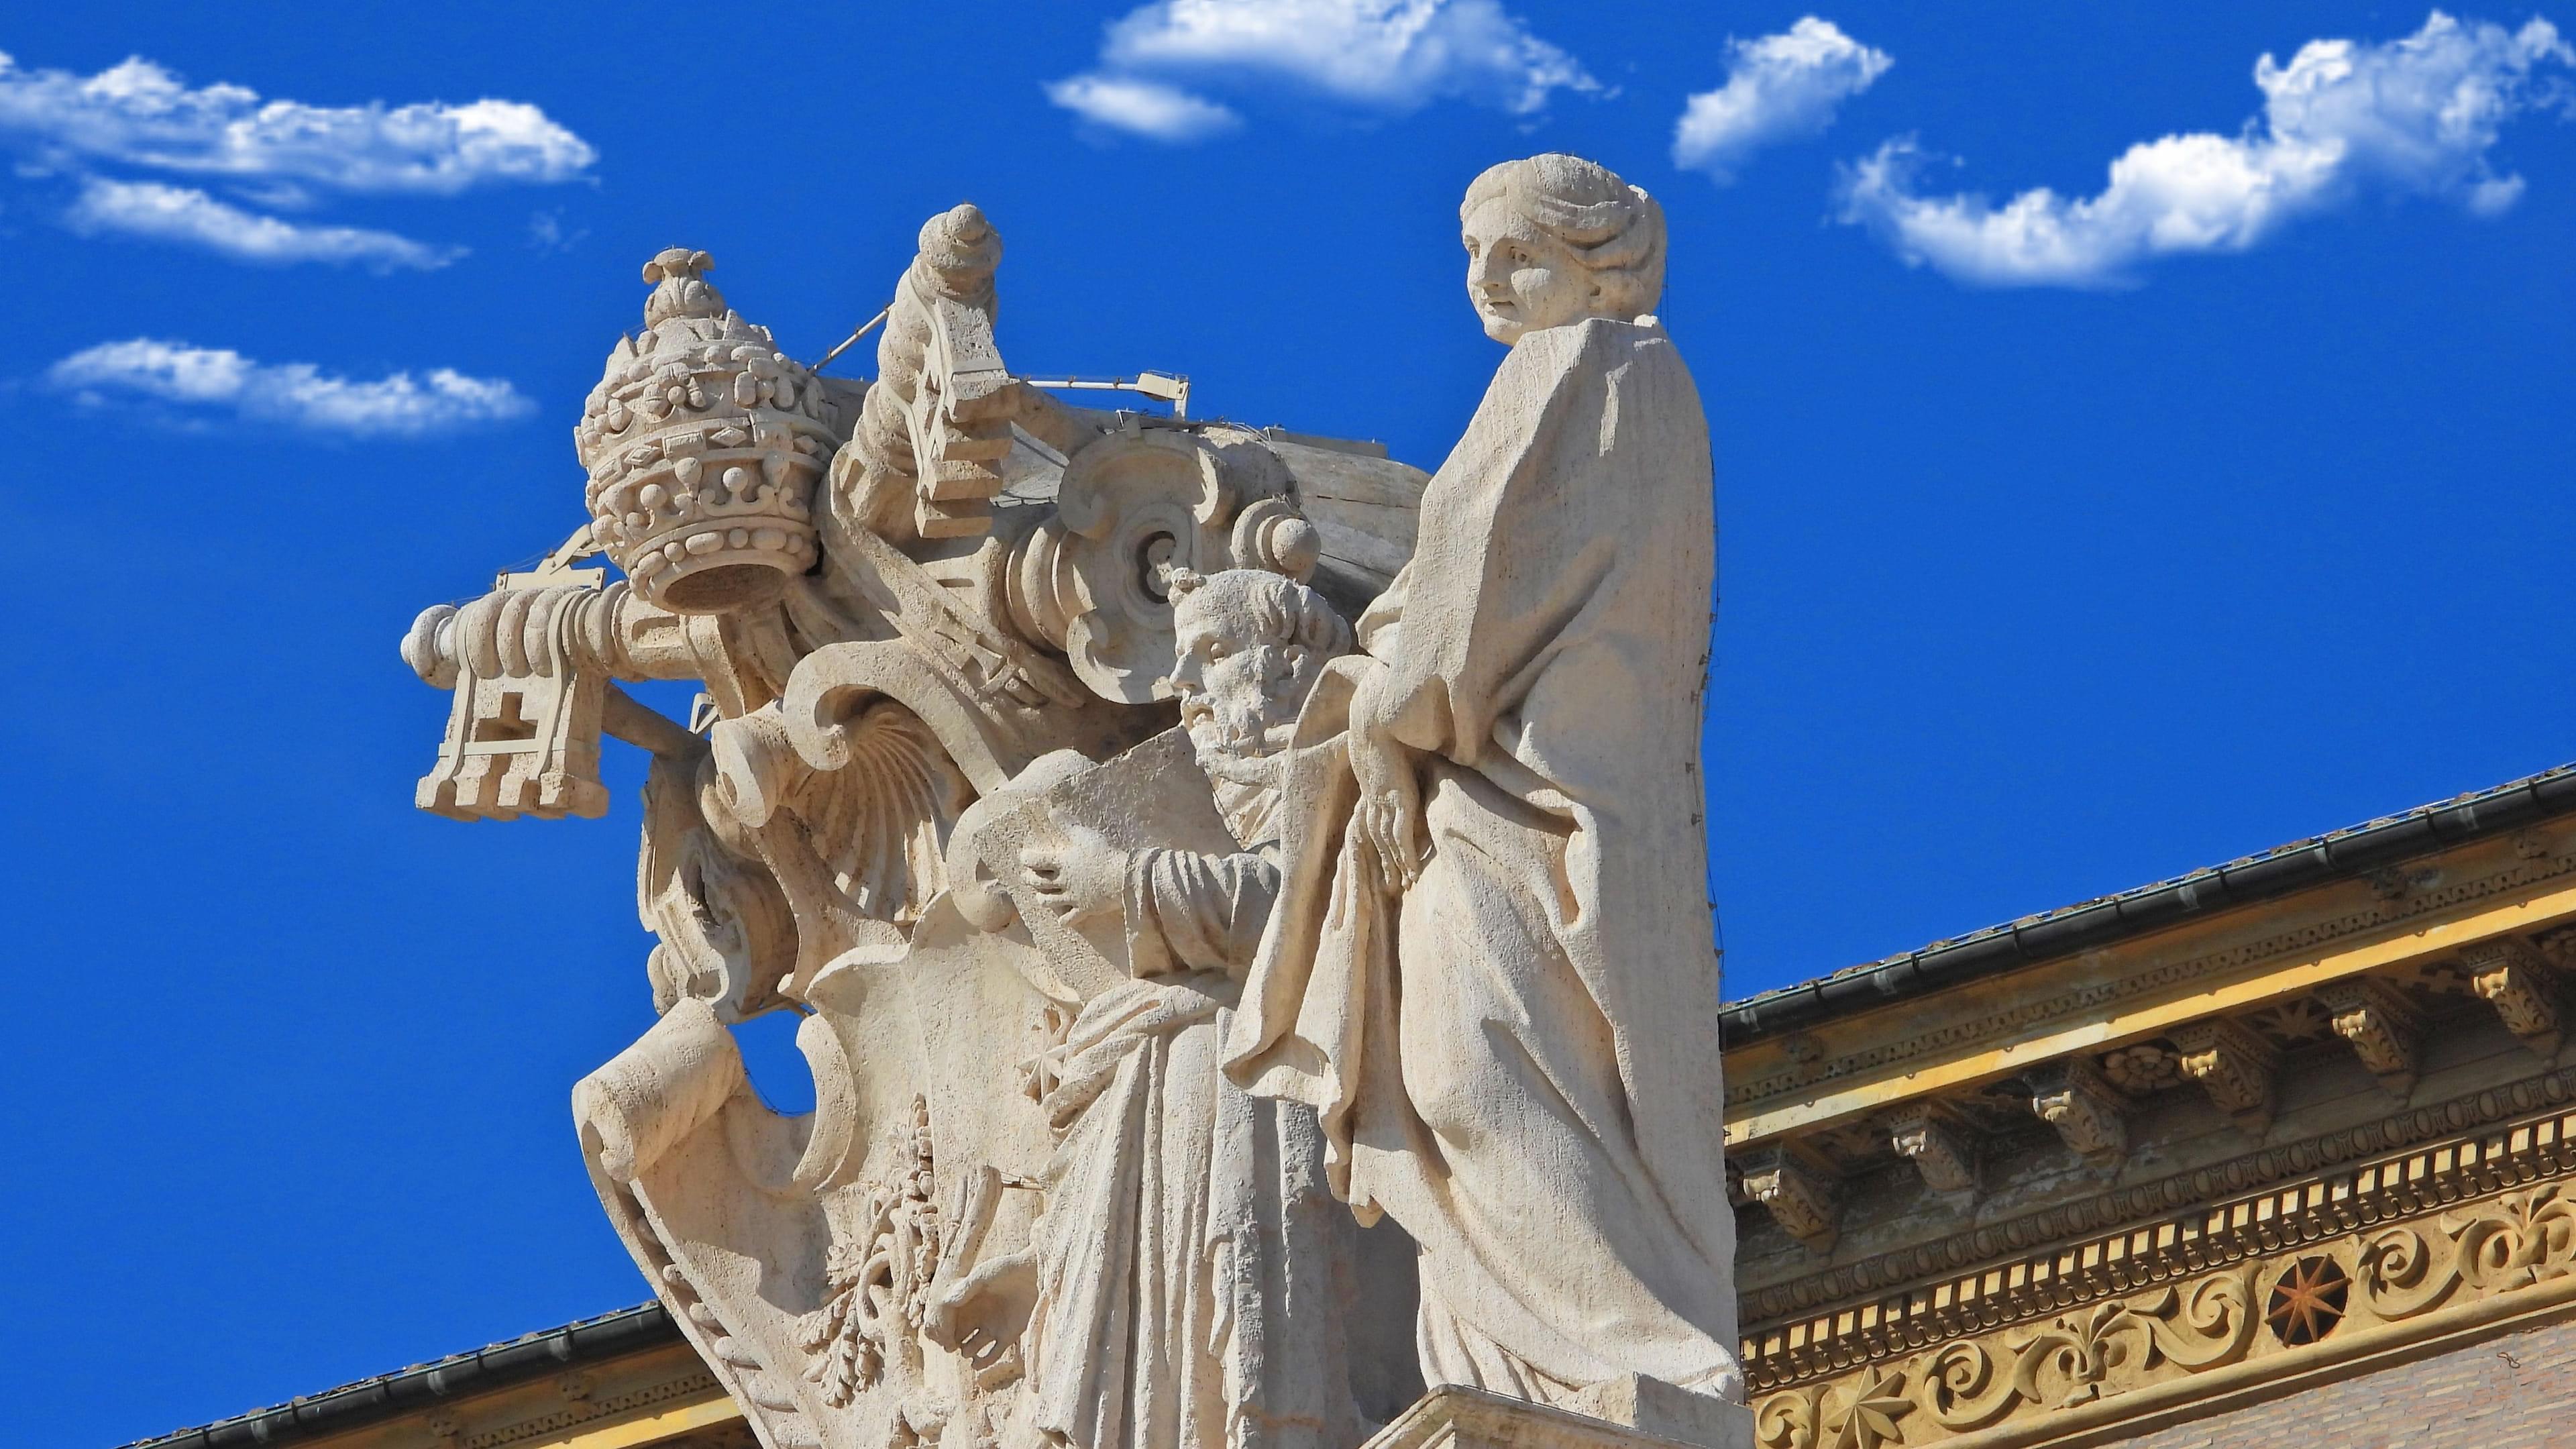 St. Peter's Basilica Statues